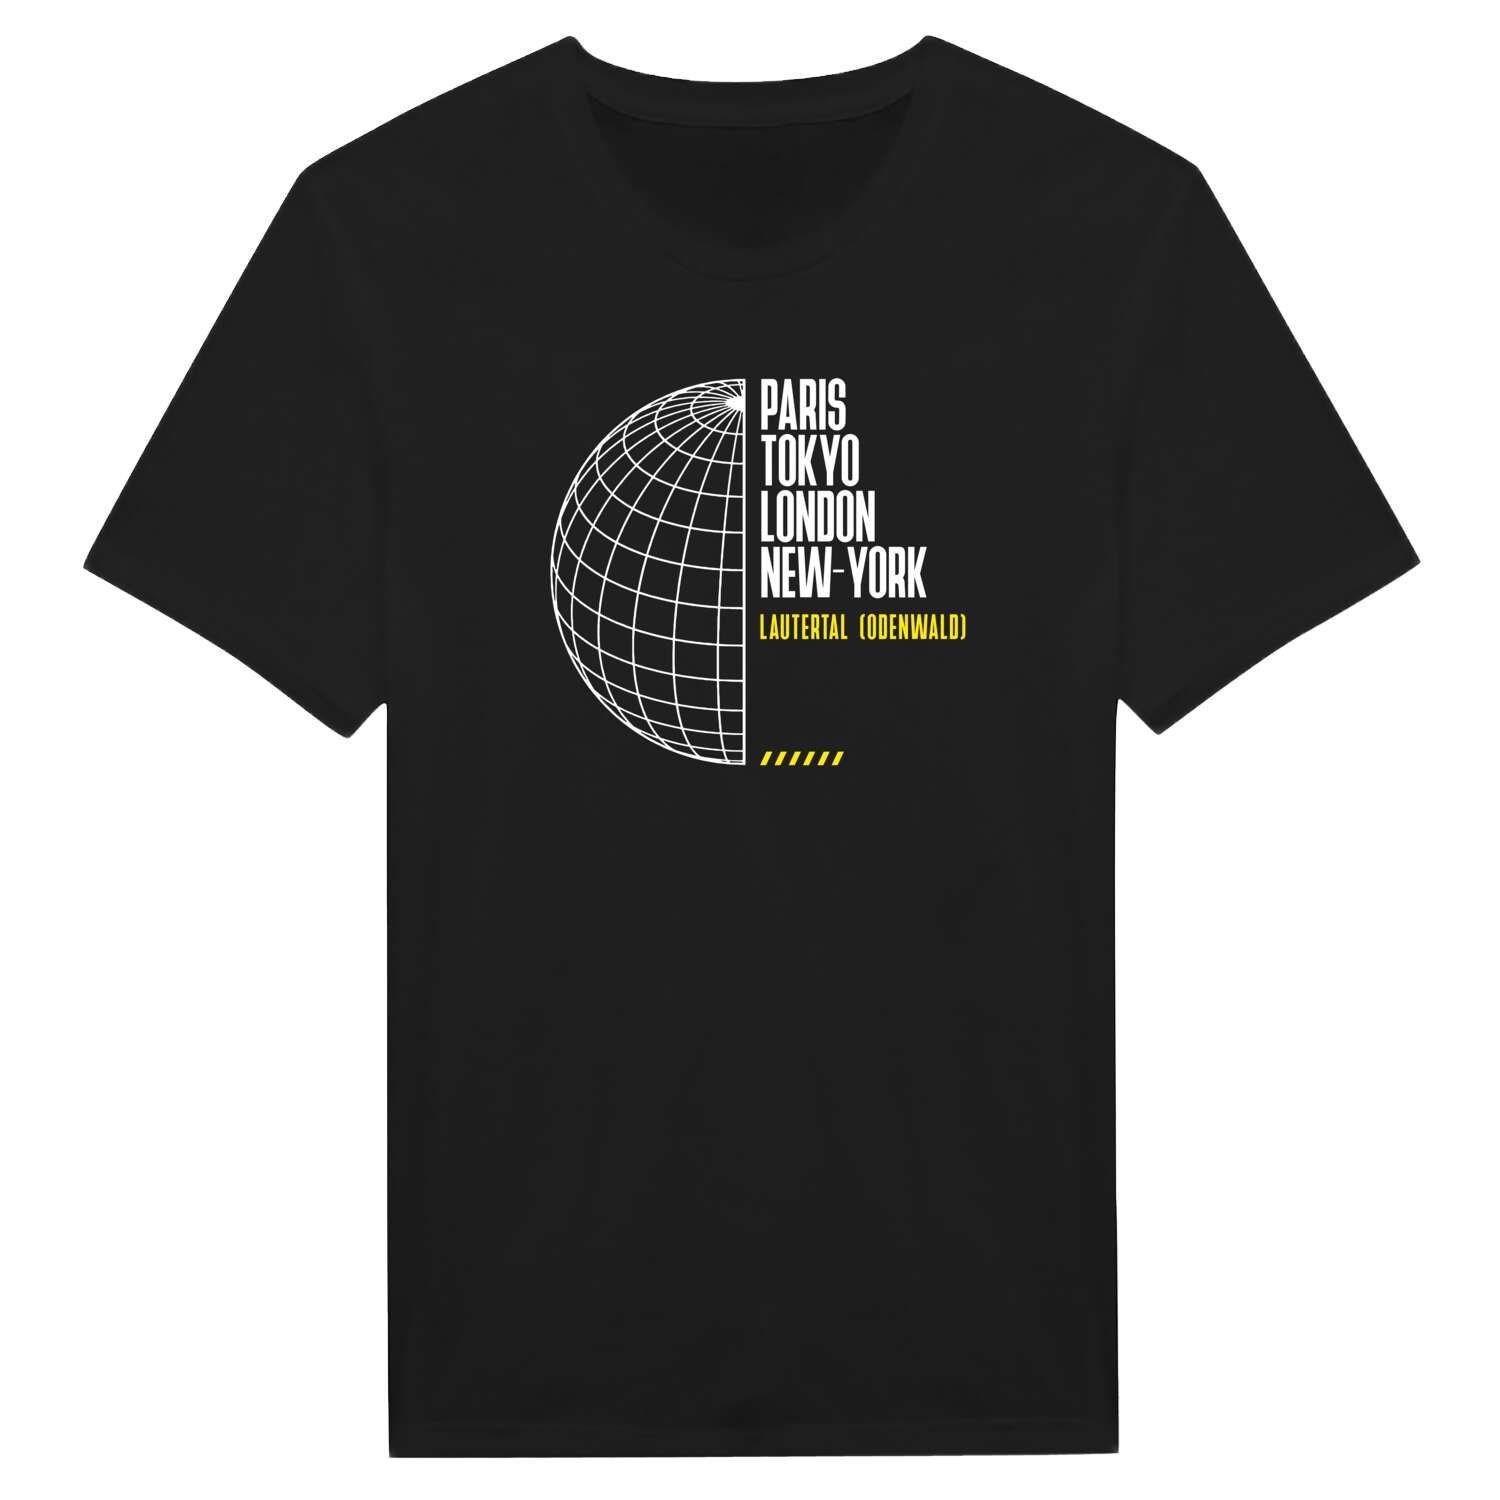 Lautertal (Odenwald) T-Shirt »Paris Tokyo London«